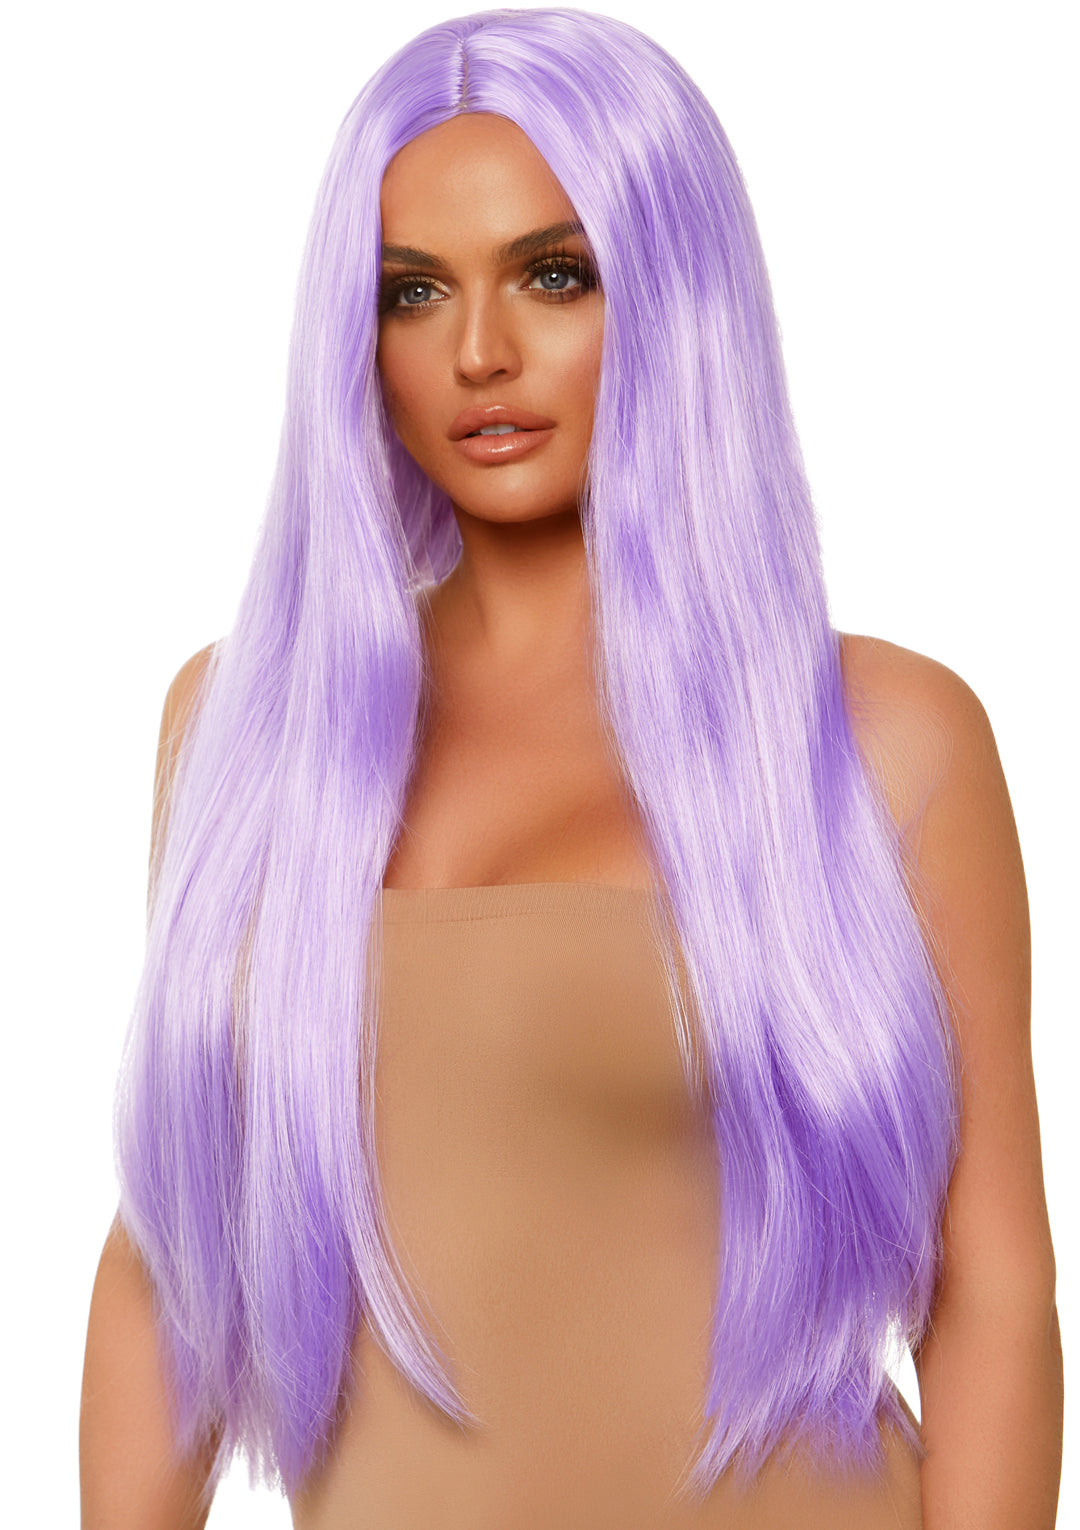 Long Straight Wig 33 Inch - Lavender LA-A2864LAV